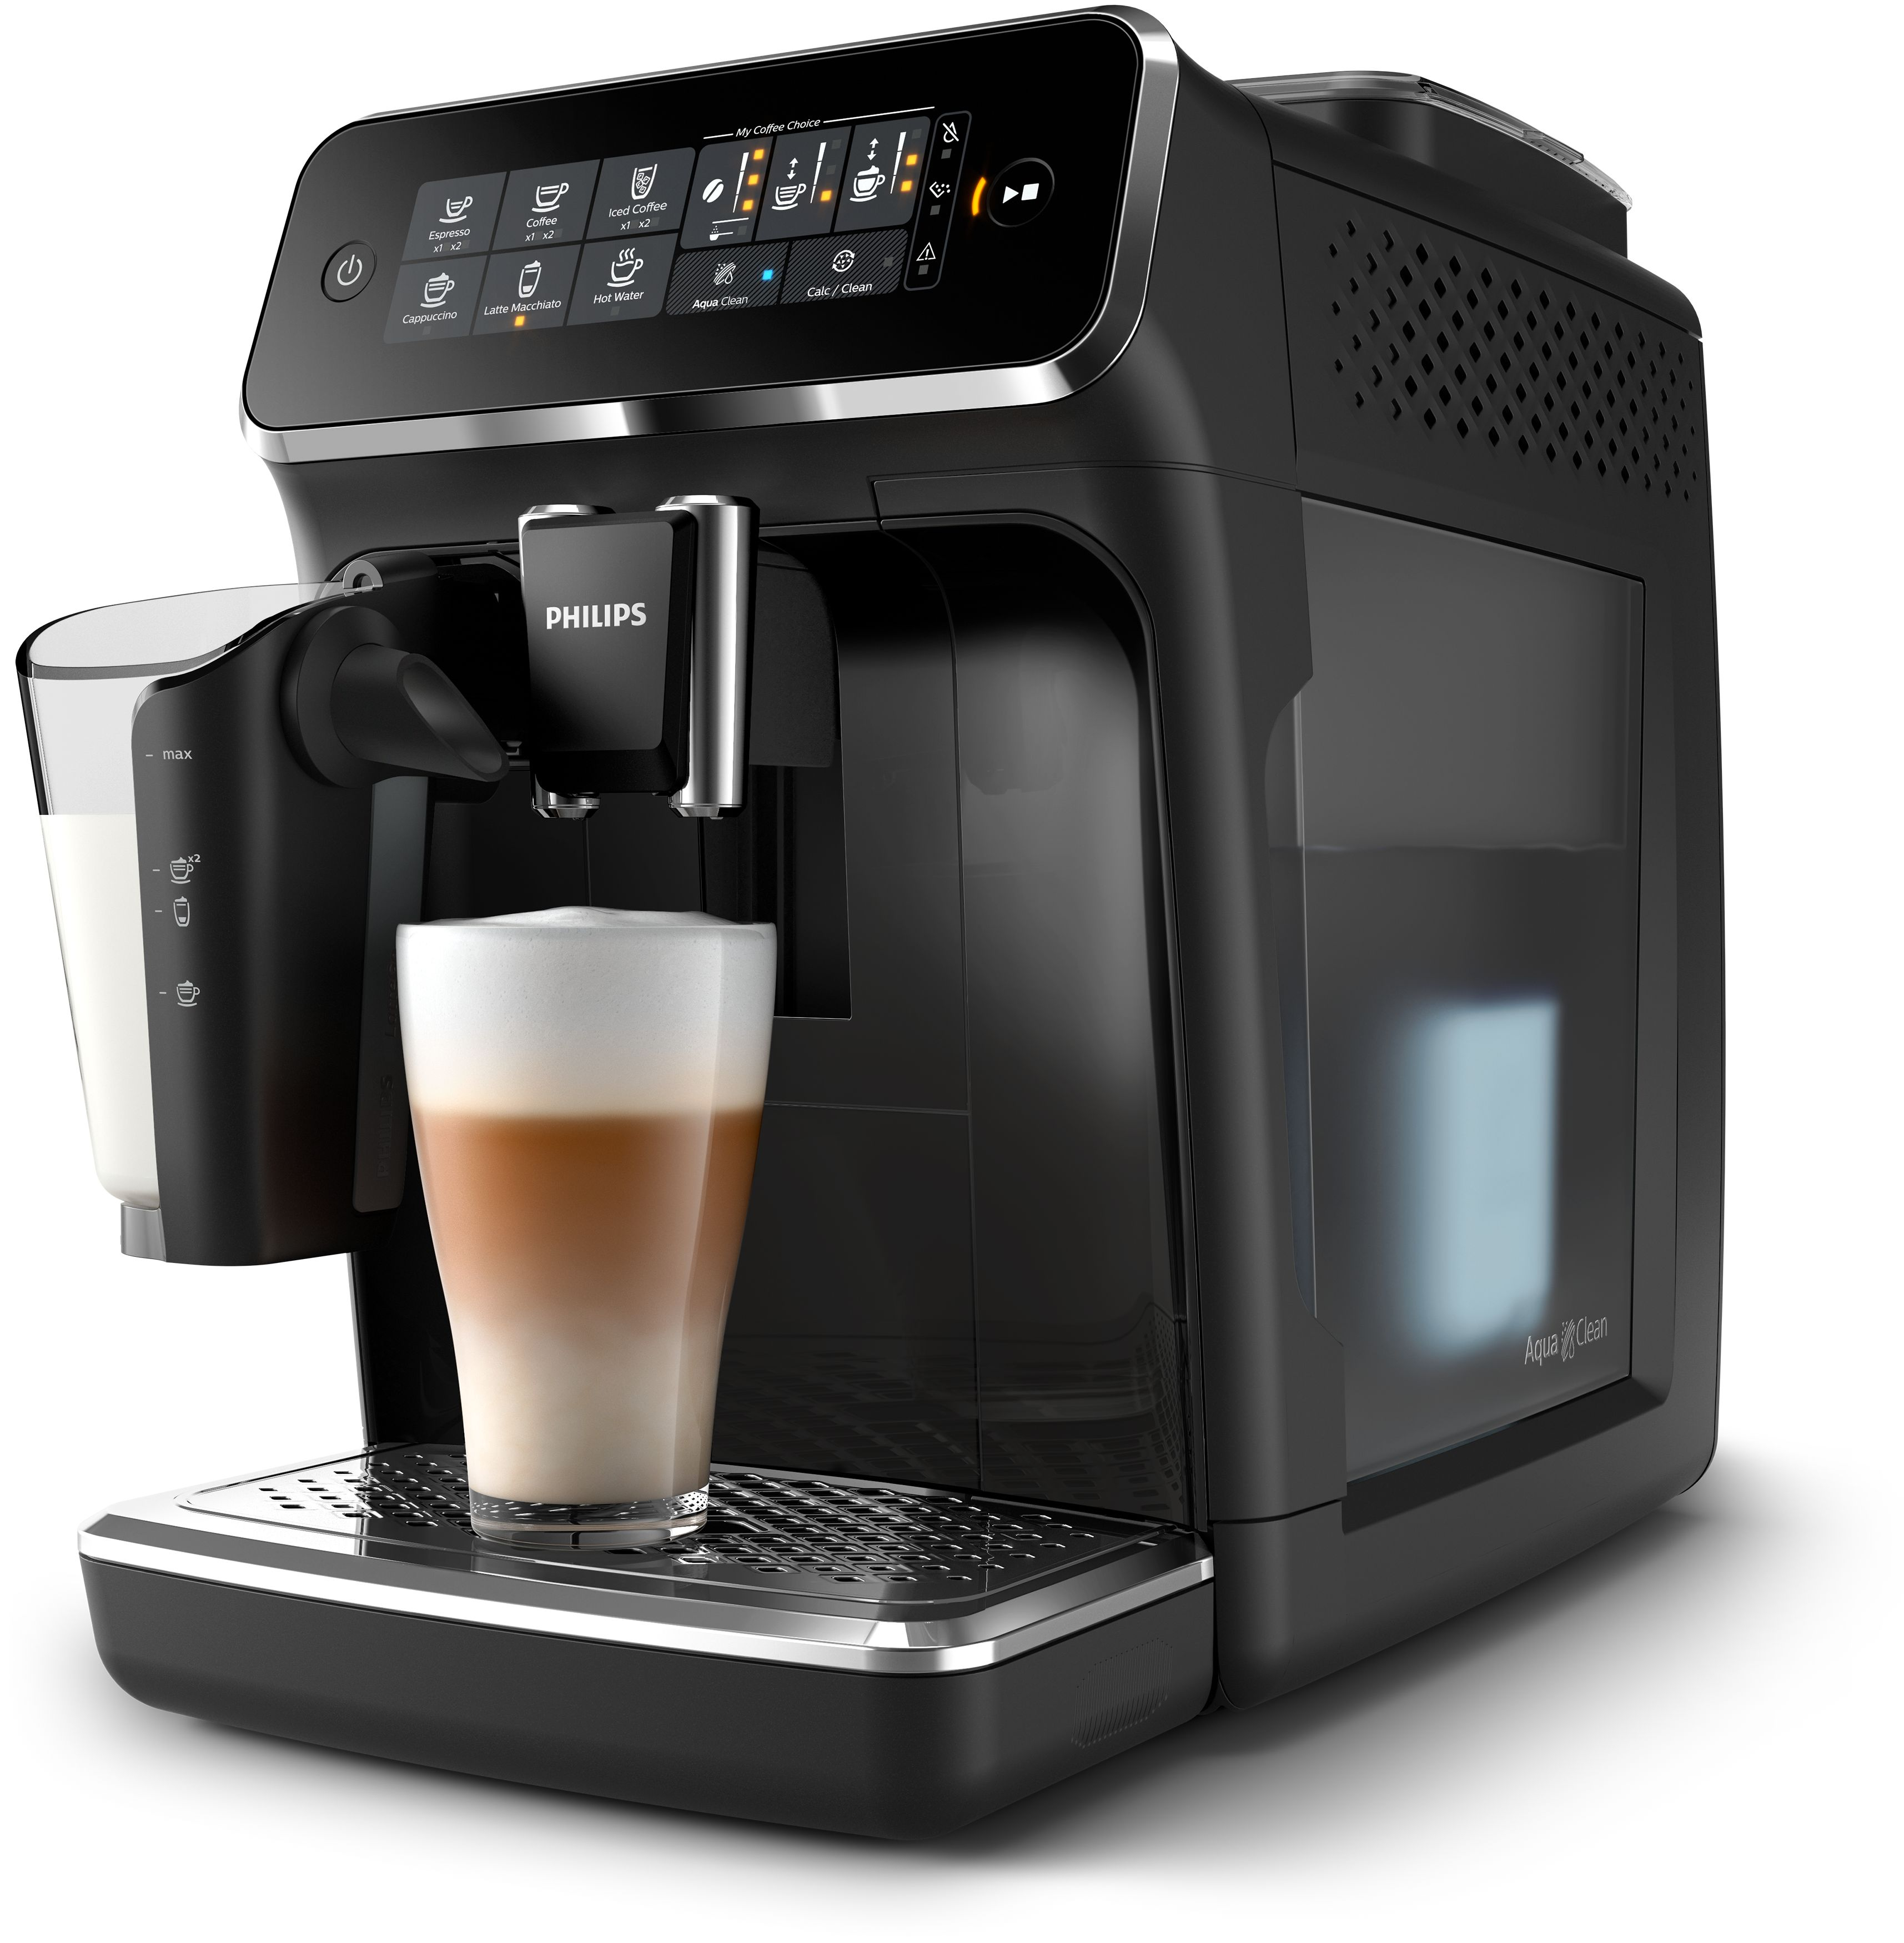 Philips EP3241/74 coffee maker